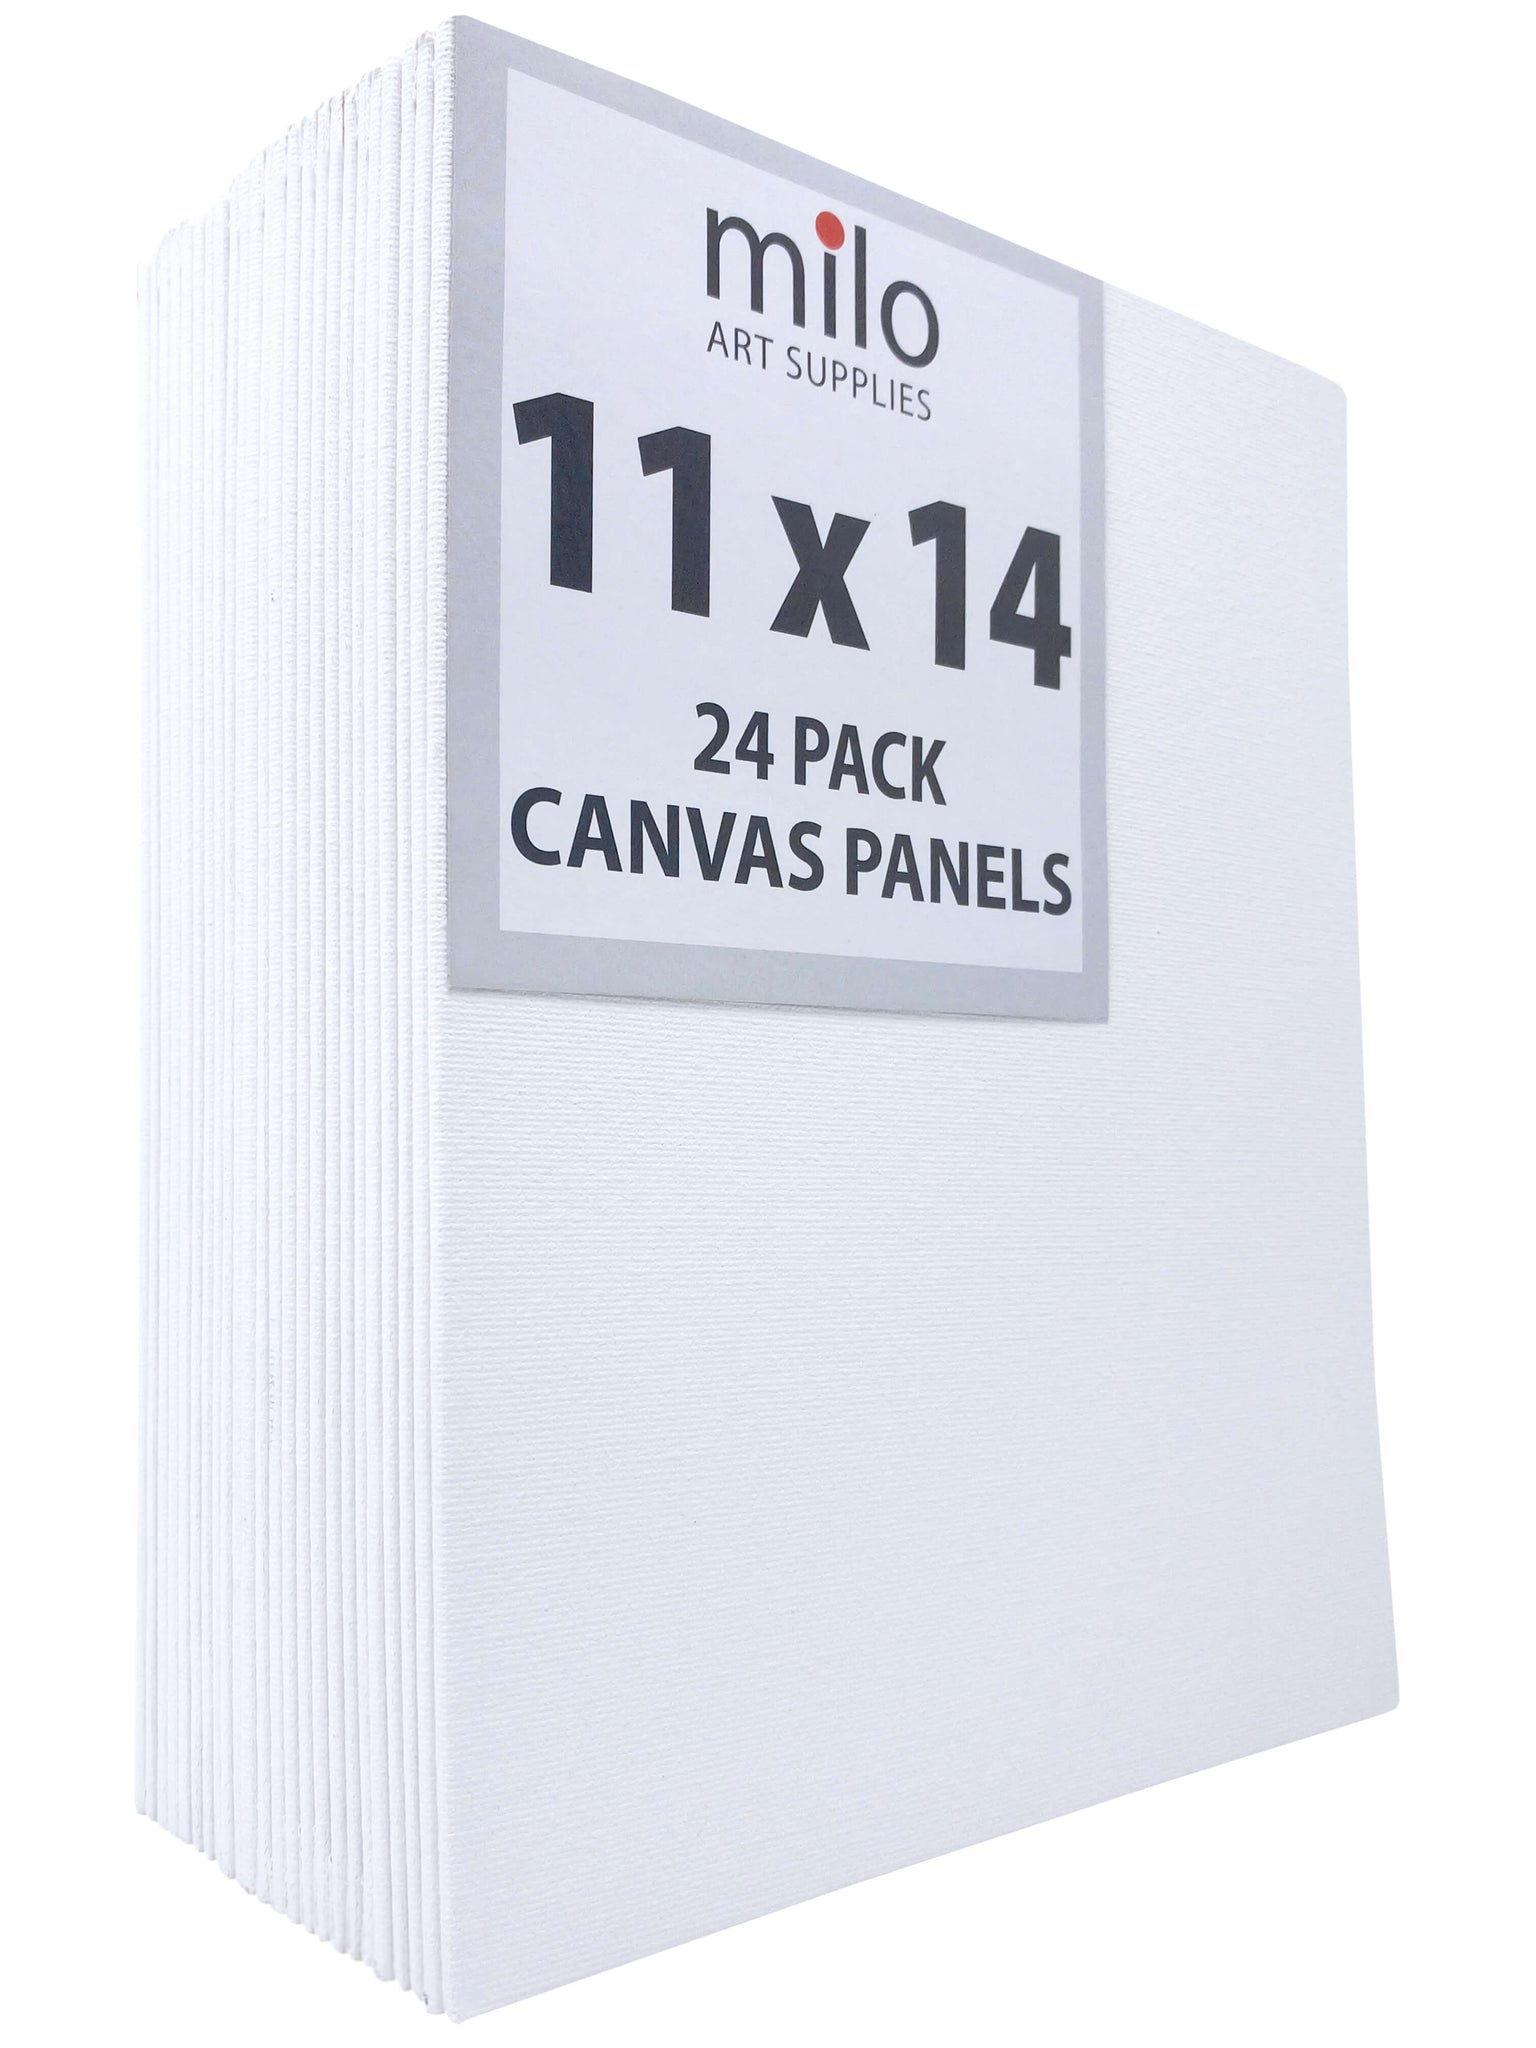 16 x 20 Canvas Panels  Pack of 12 – Milo Art Supplies